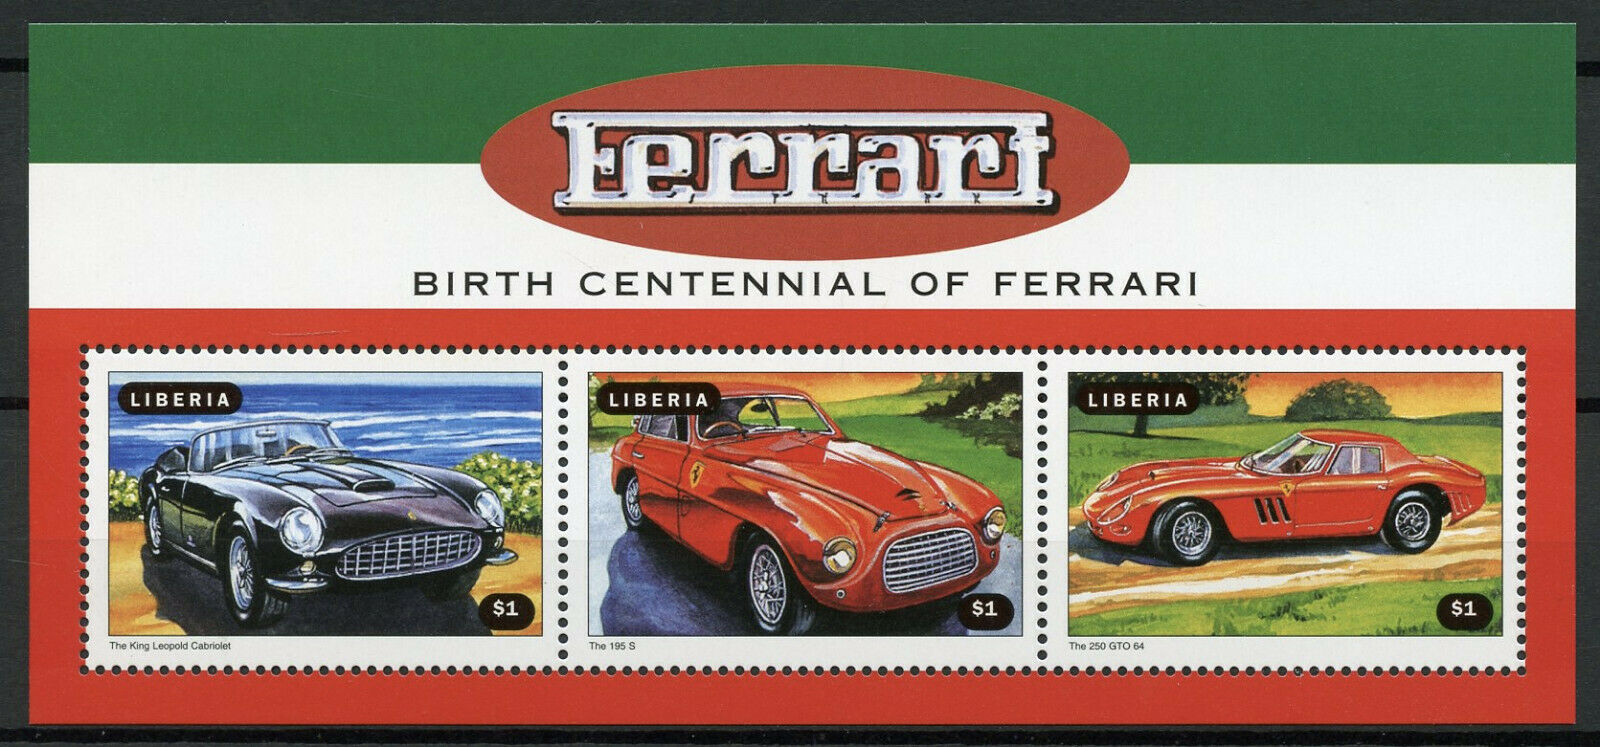 Liberia 1998 MNH Cars Stamps Ferrari King Leopold Cabriolet Auto Racing 3v M/S